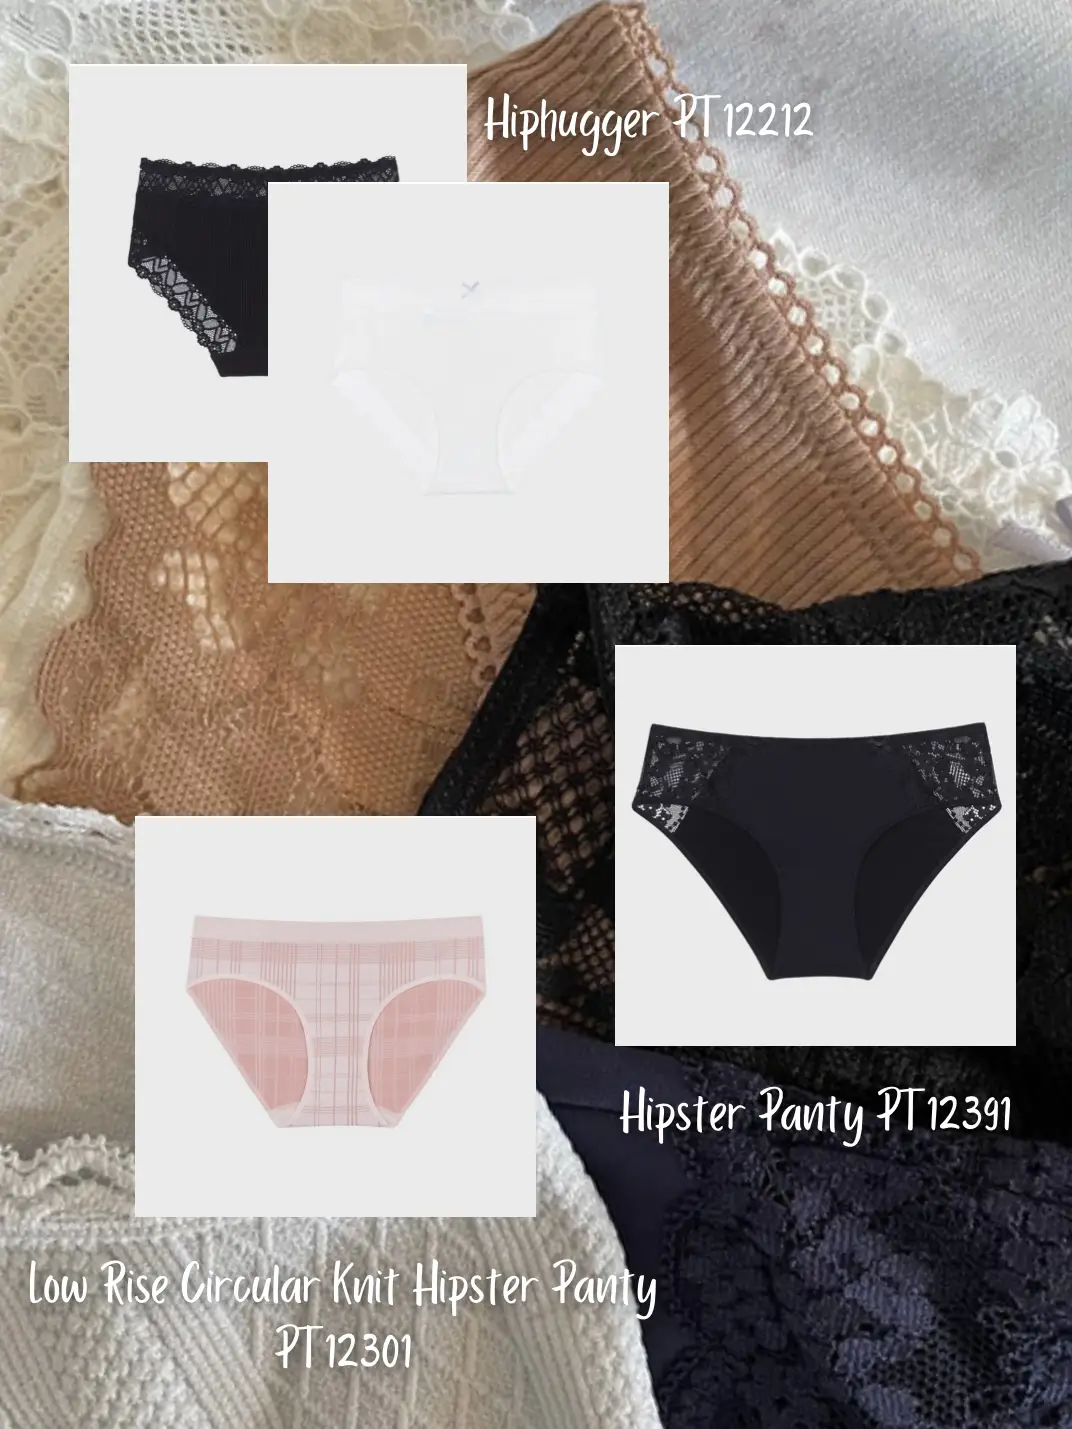 N-Gal Panties Cheeky Lace Mid Waist T Back Underwear Lingerie